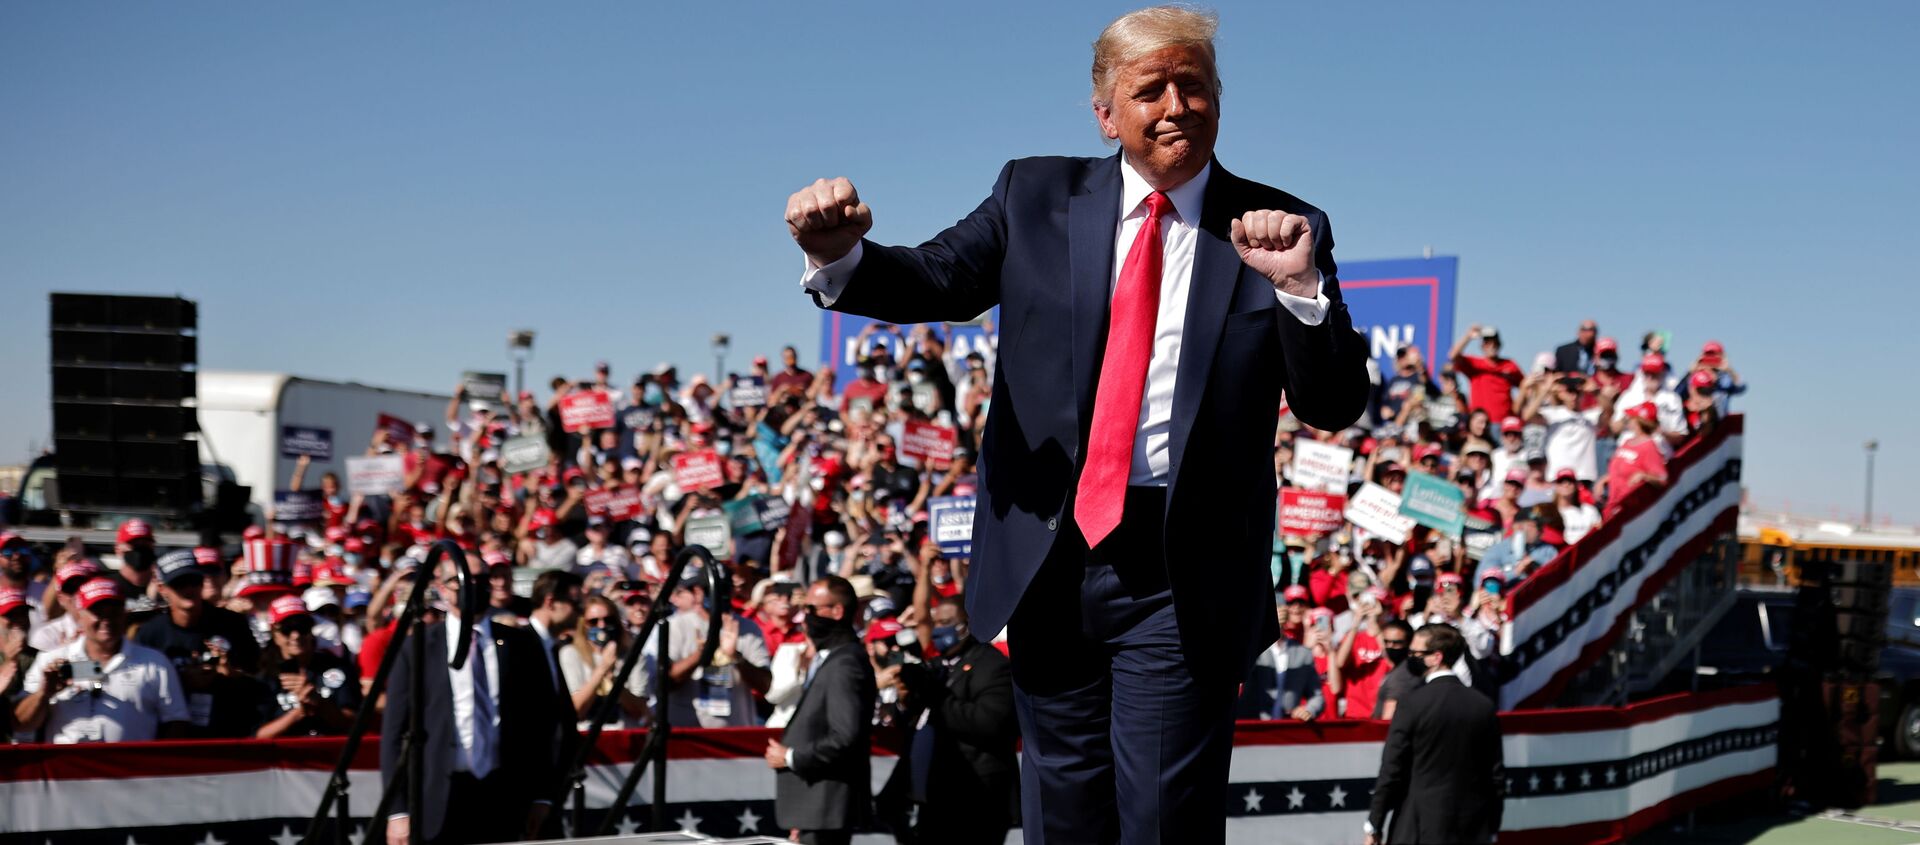 U.S. President Donald Trump gestures as he attends a campaign rally at Prescott Regional Airport, in Arizona, U.S., October 19, 2020. REUTERS/Carlos Barria - Sputnik Türkiye, 1920, 23.10.2020